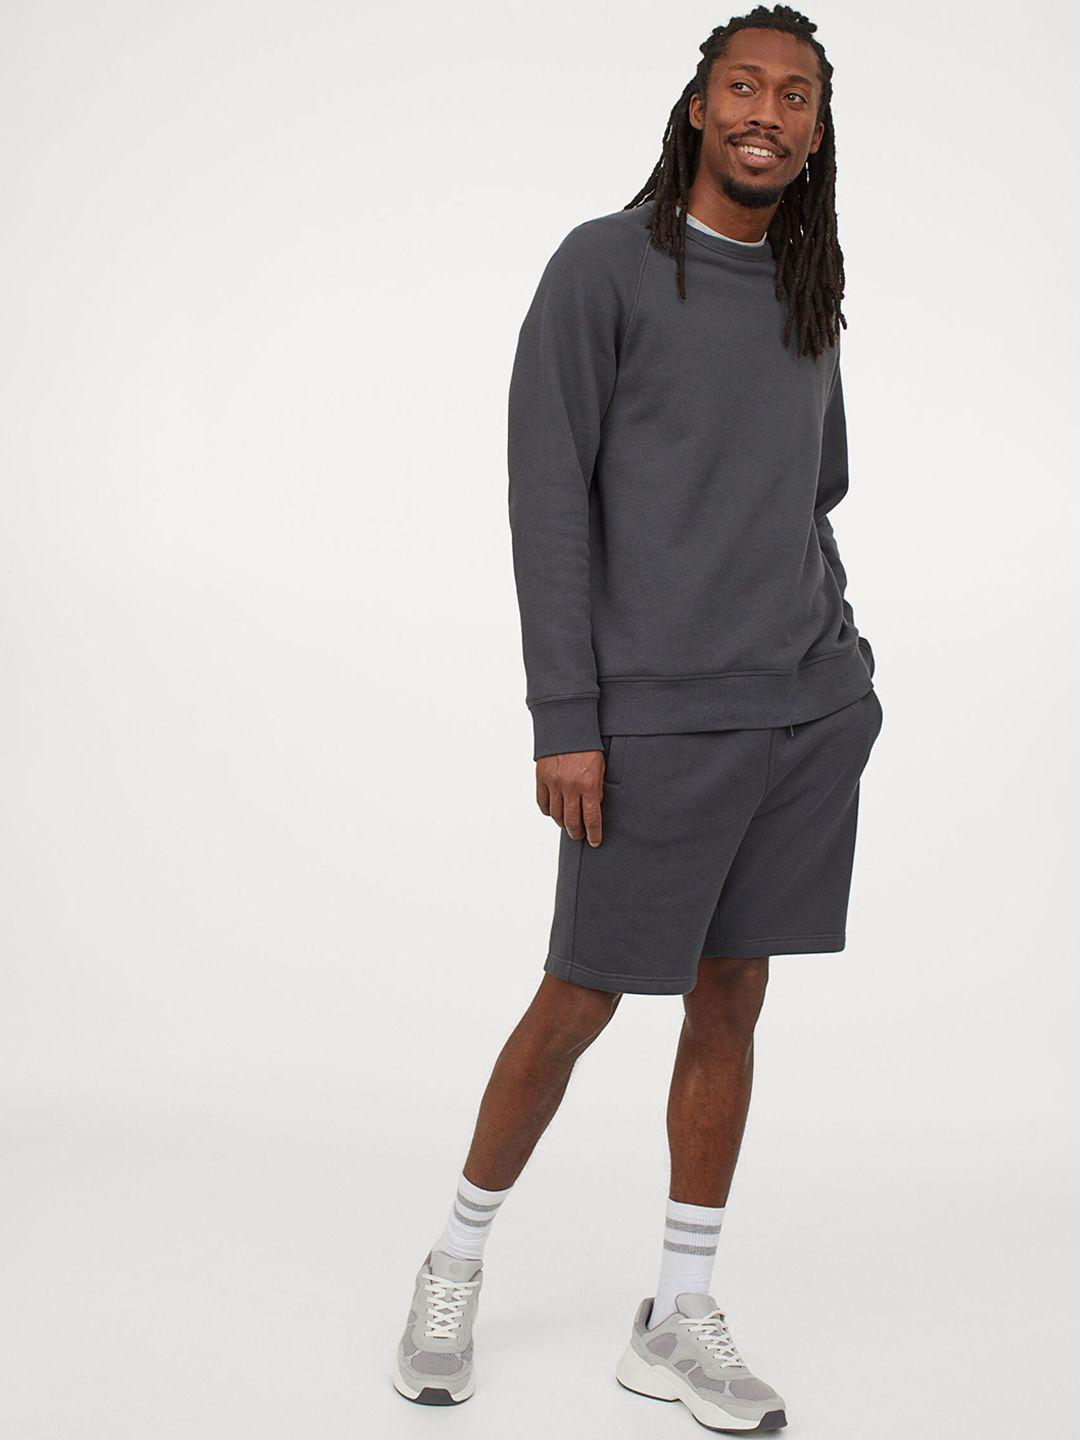 h&m-men-grey-solid-regular-fit-sweatshirt-shorts